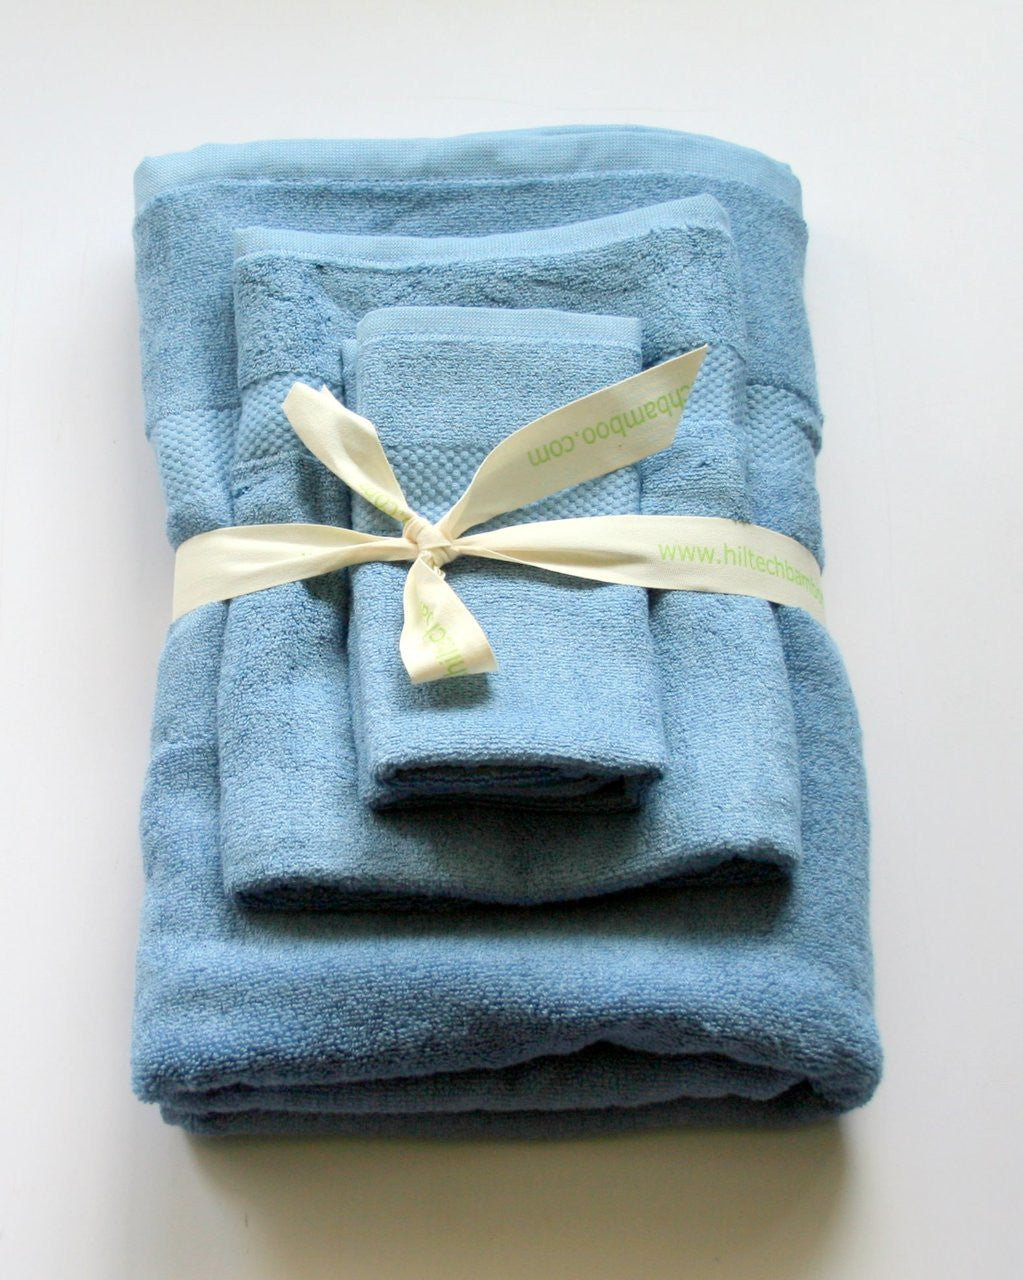 Hiltech Bamboo - Bamboo Towel Set blue